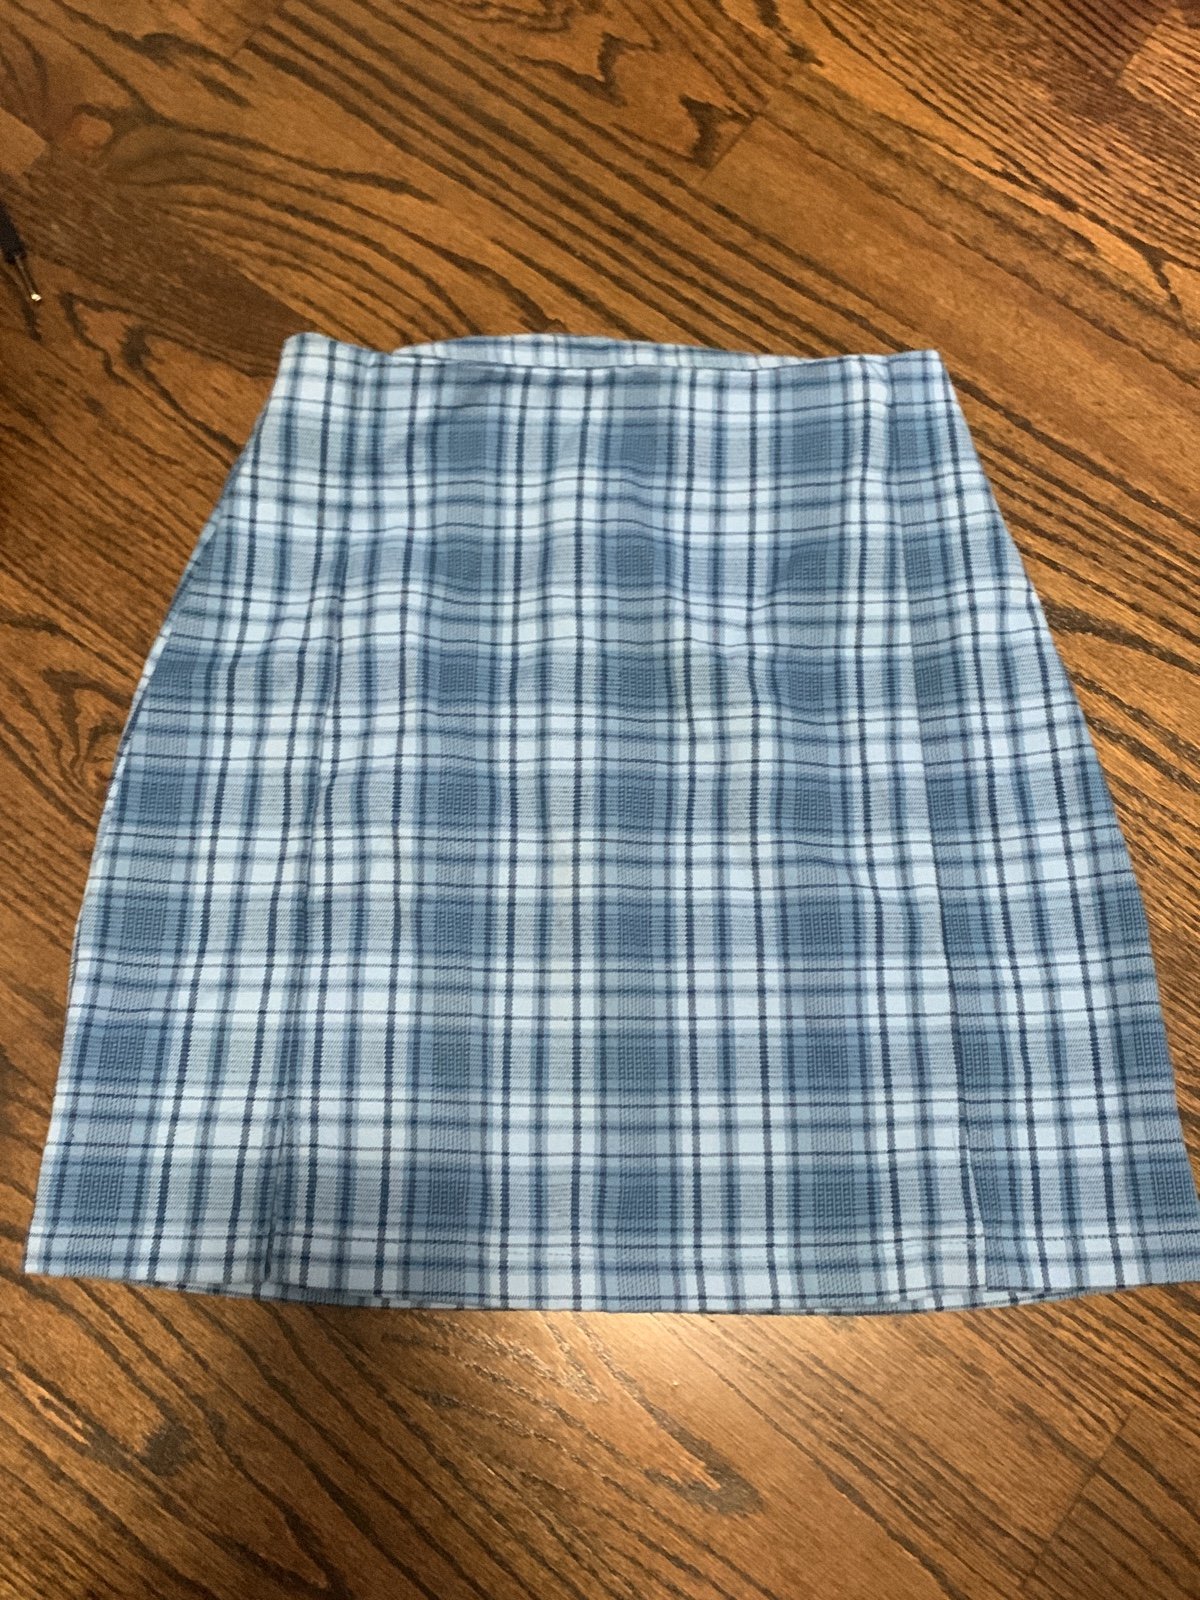 Elegant Brandy Melville Plaid Skirt I6RbjNdMw High Quaity